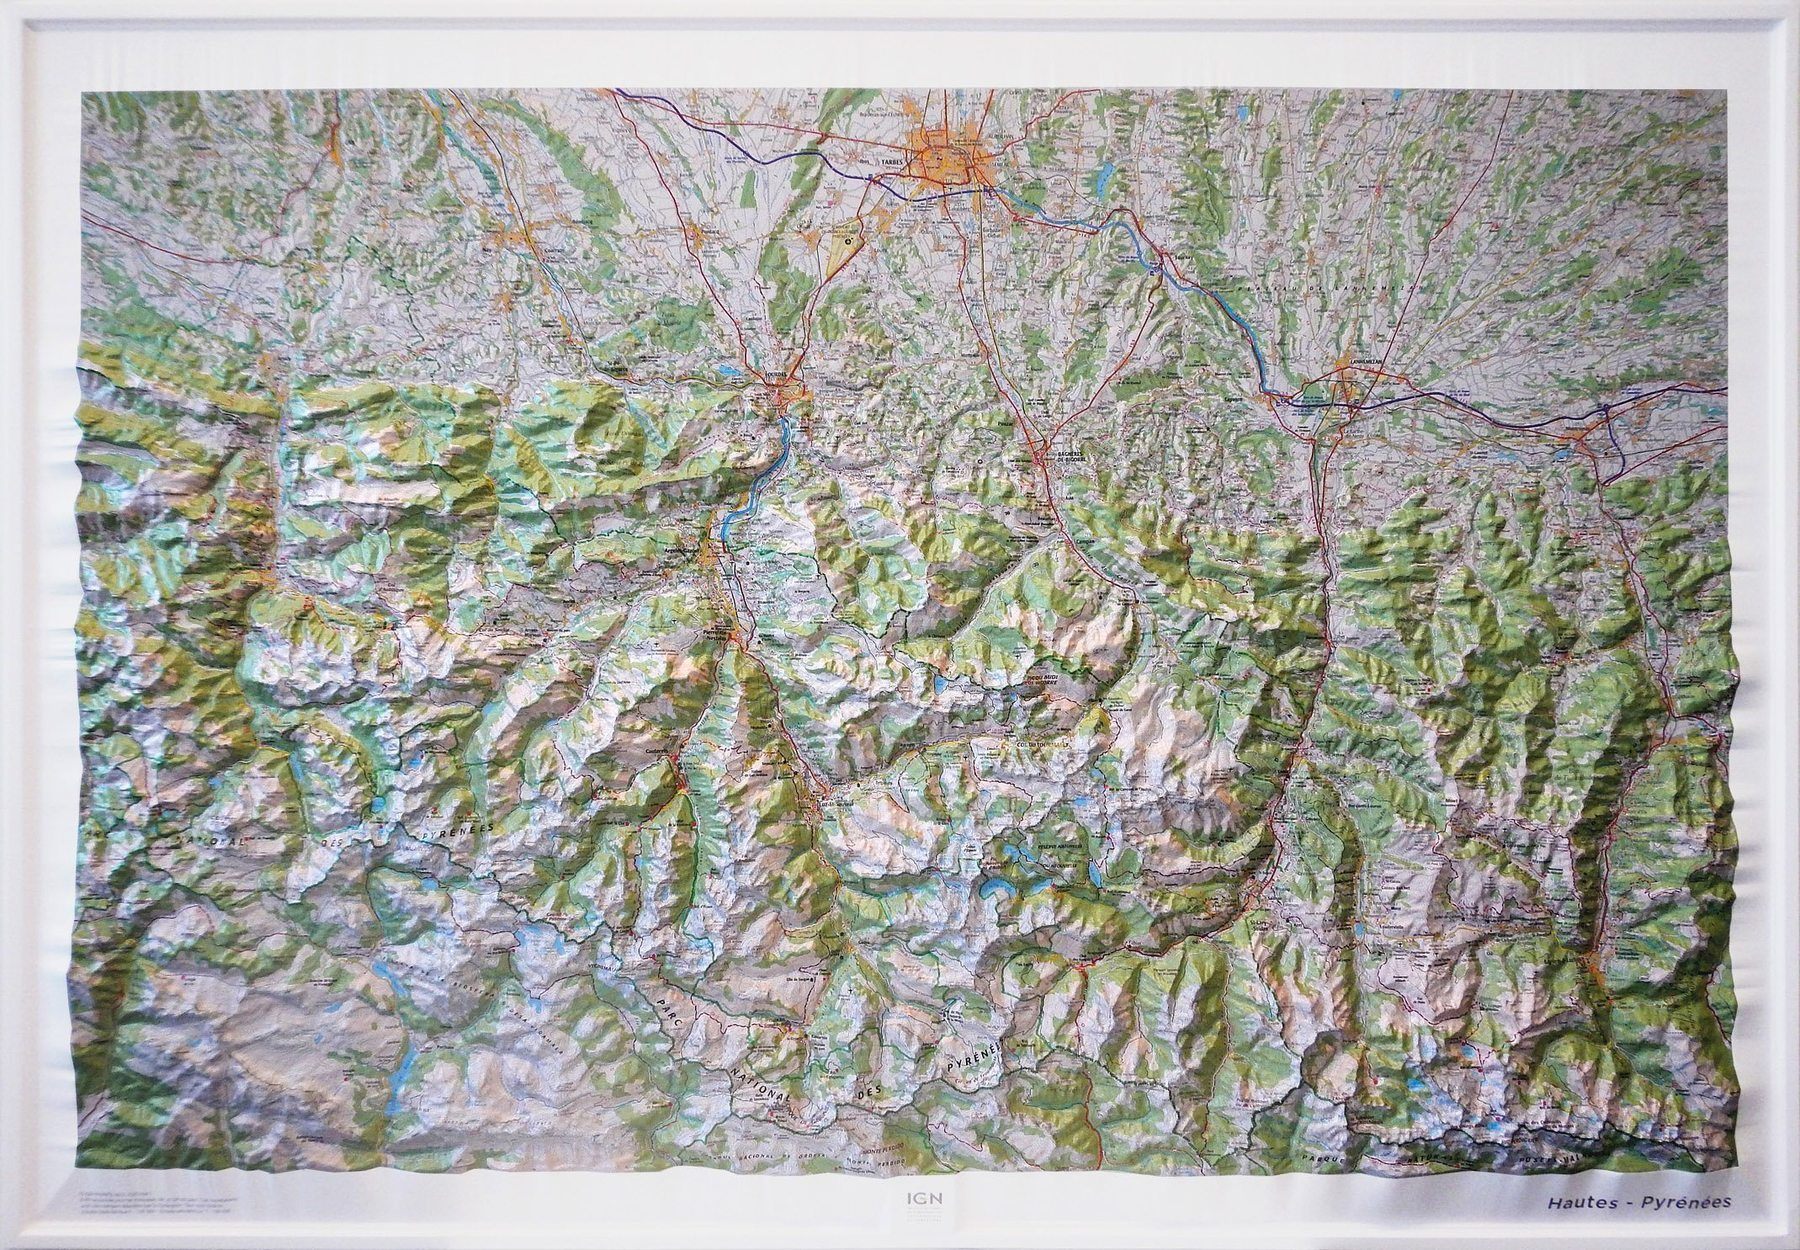 Carte du Monde Murale en Bois | Map Monde en relief - Blanc